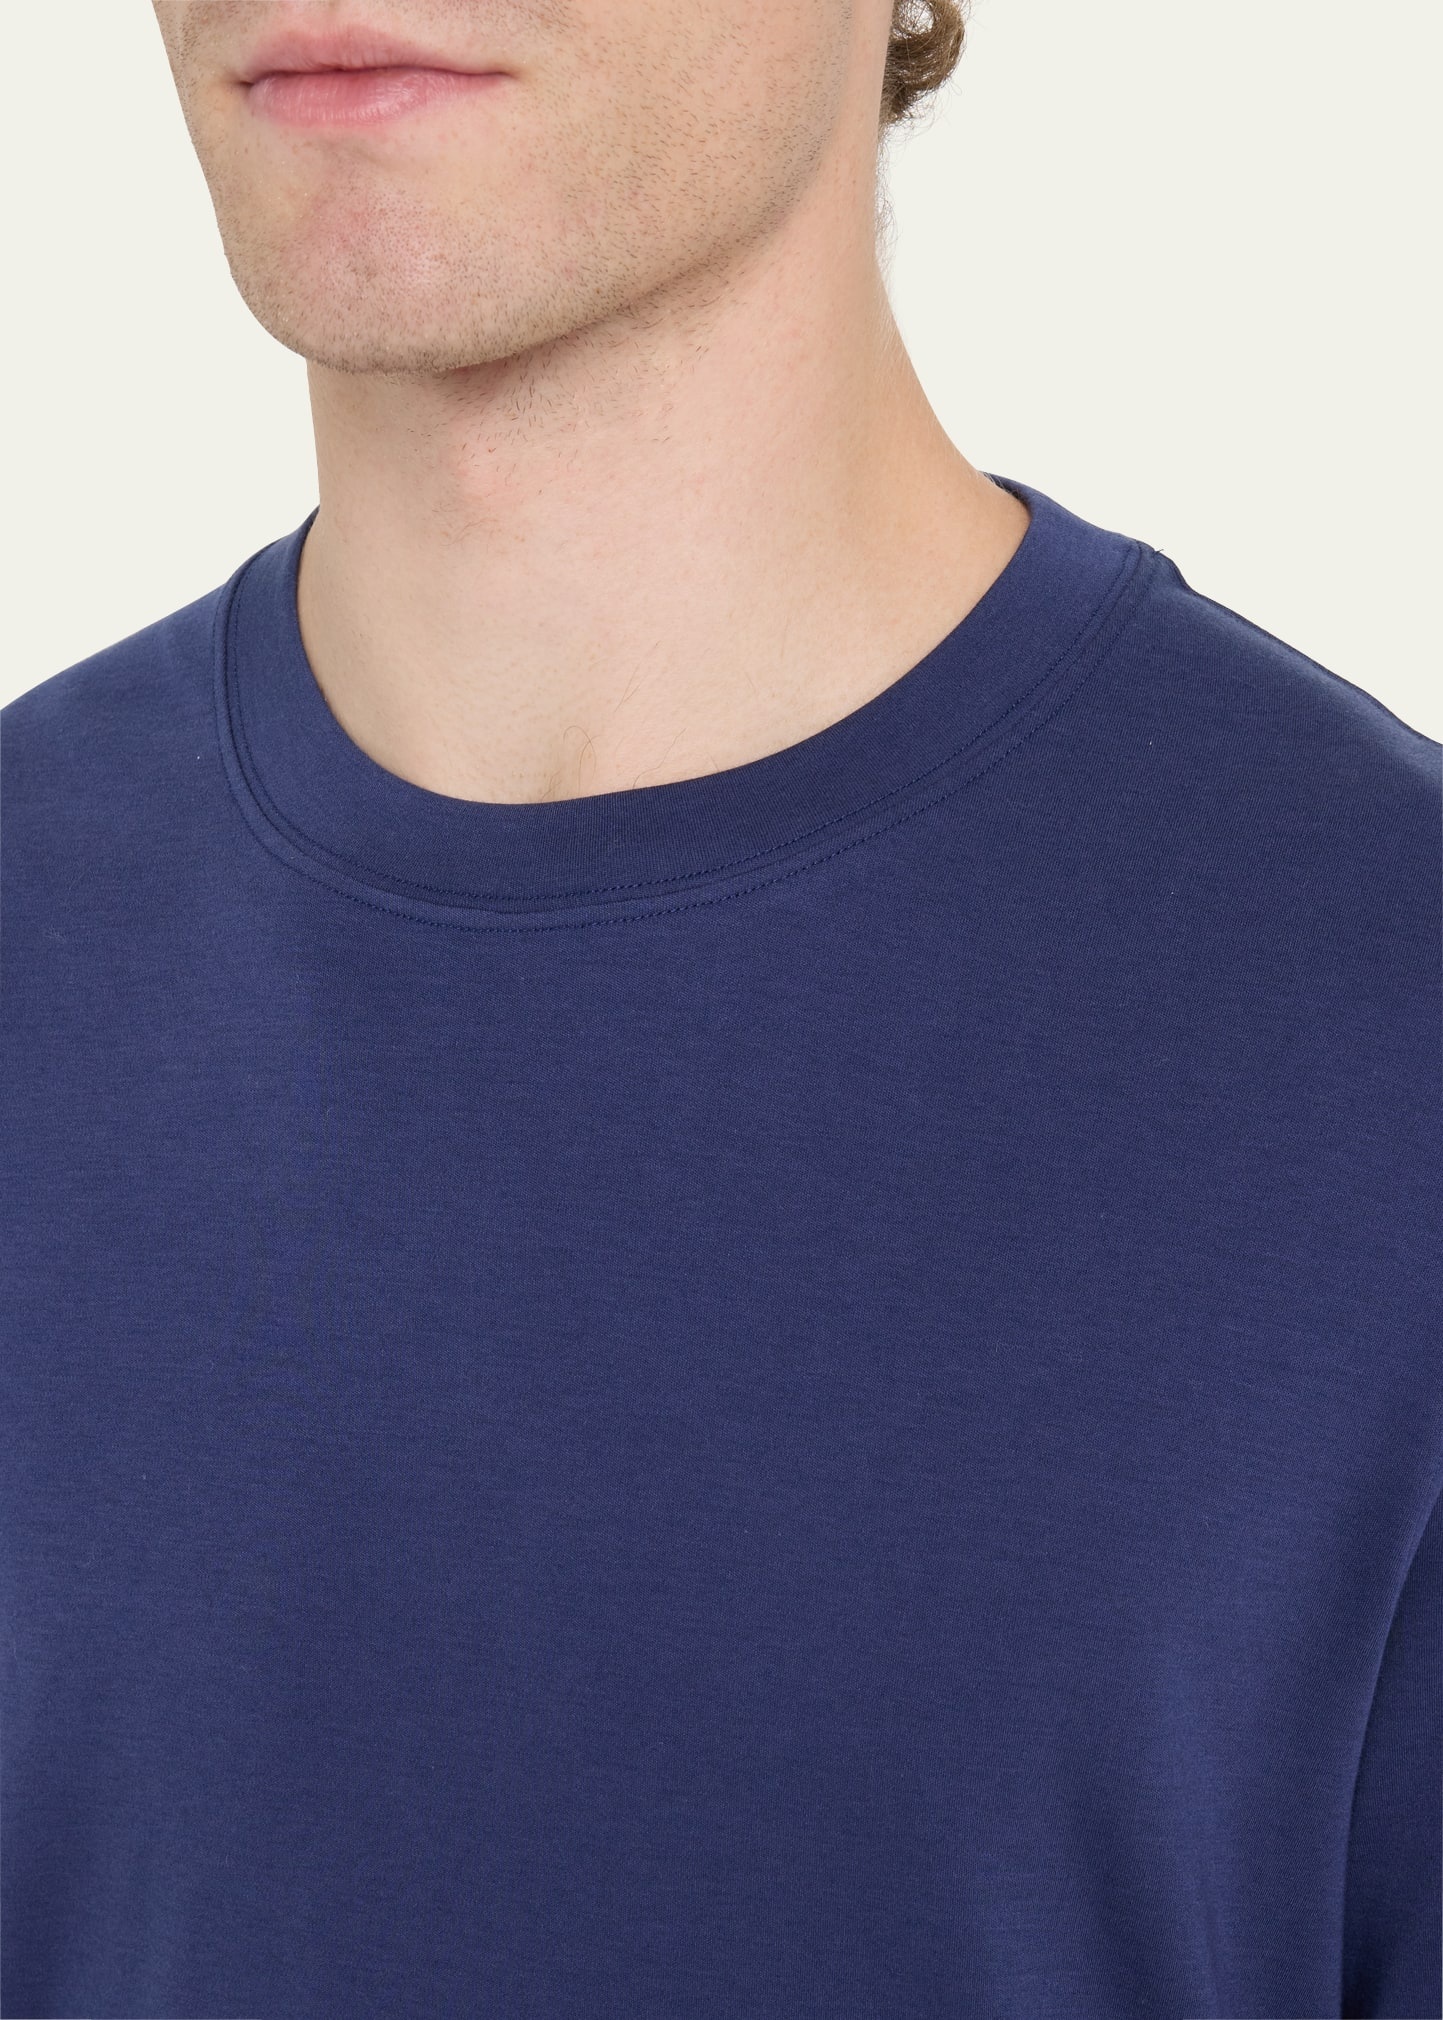 Men's Cotton-Silk Crewneck T-Shirt - 5